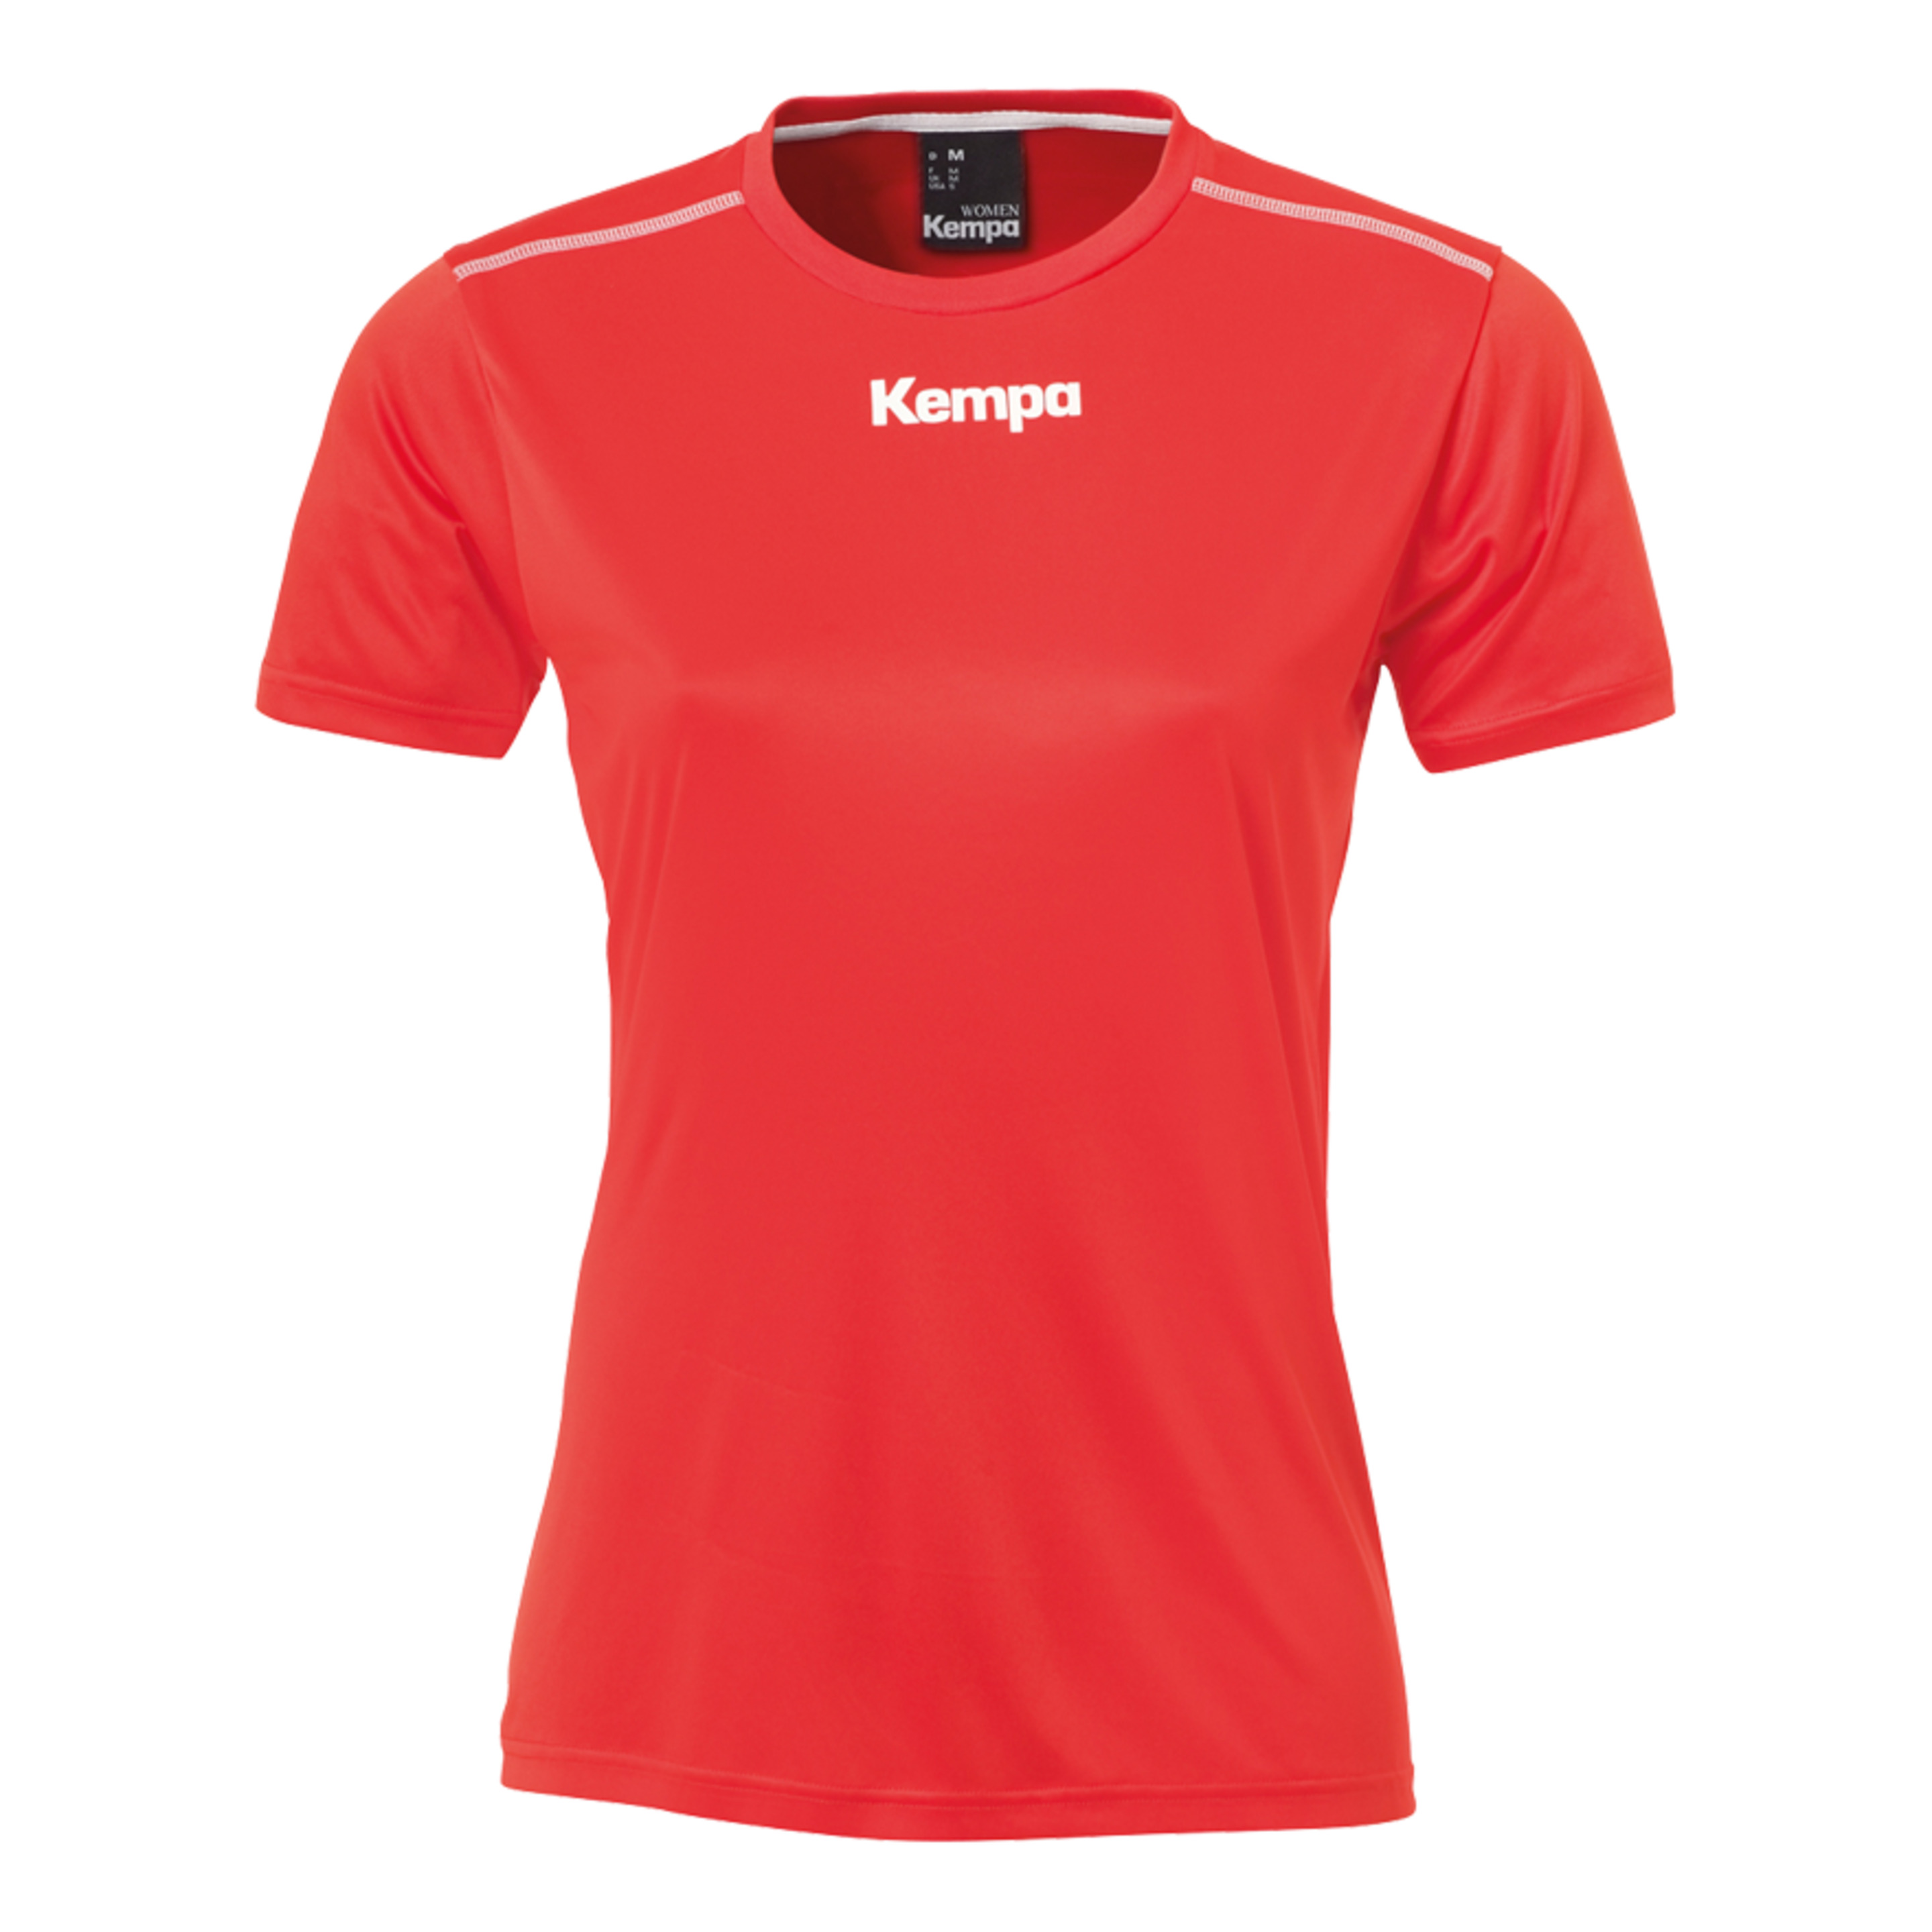 Poly Shirt De Mujer Rojo Kempa - rojo - 